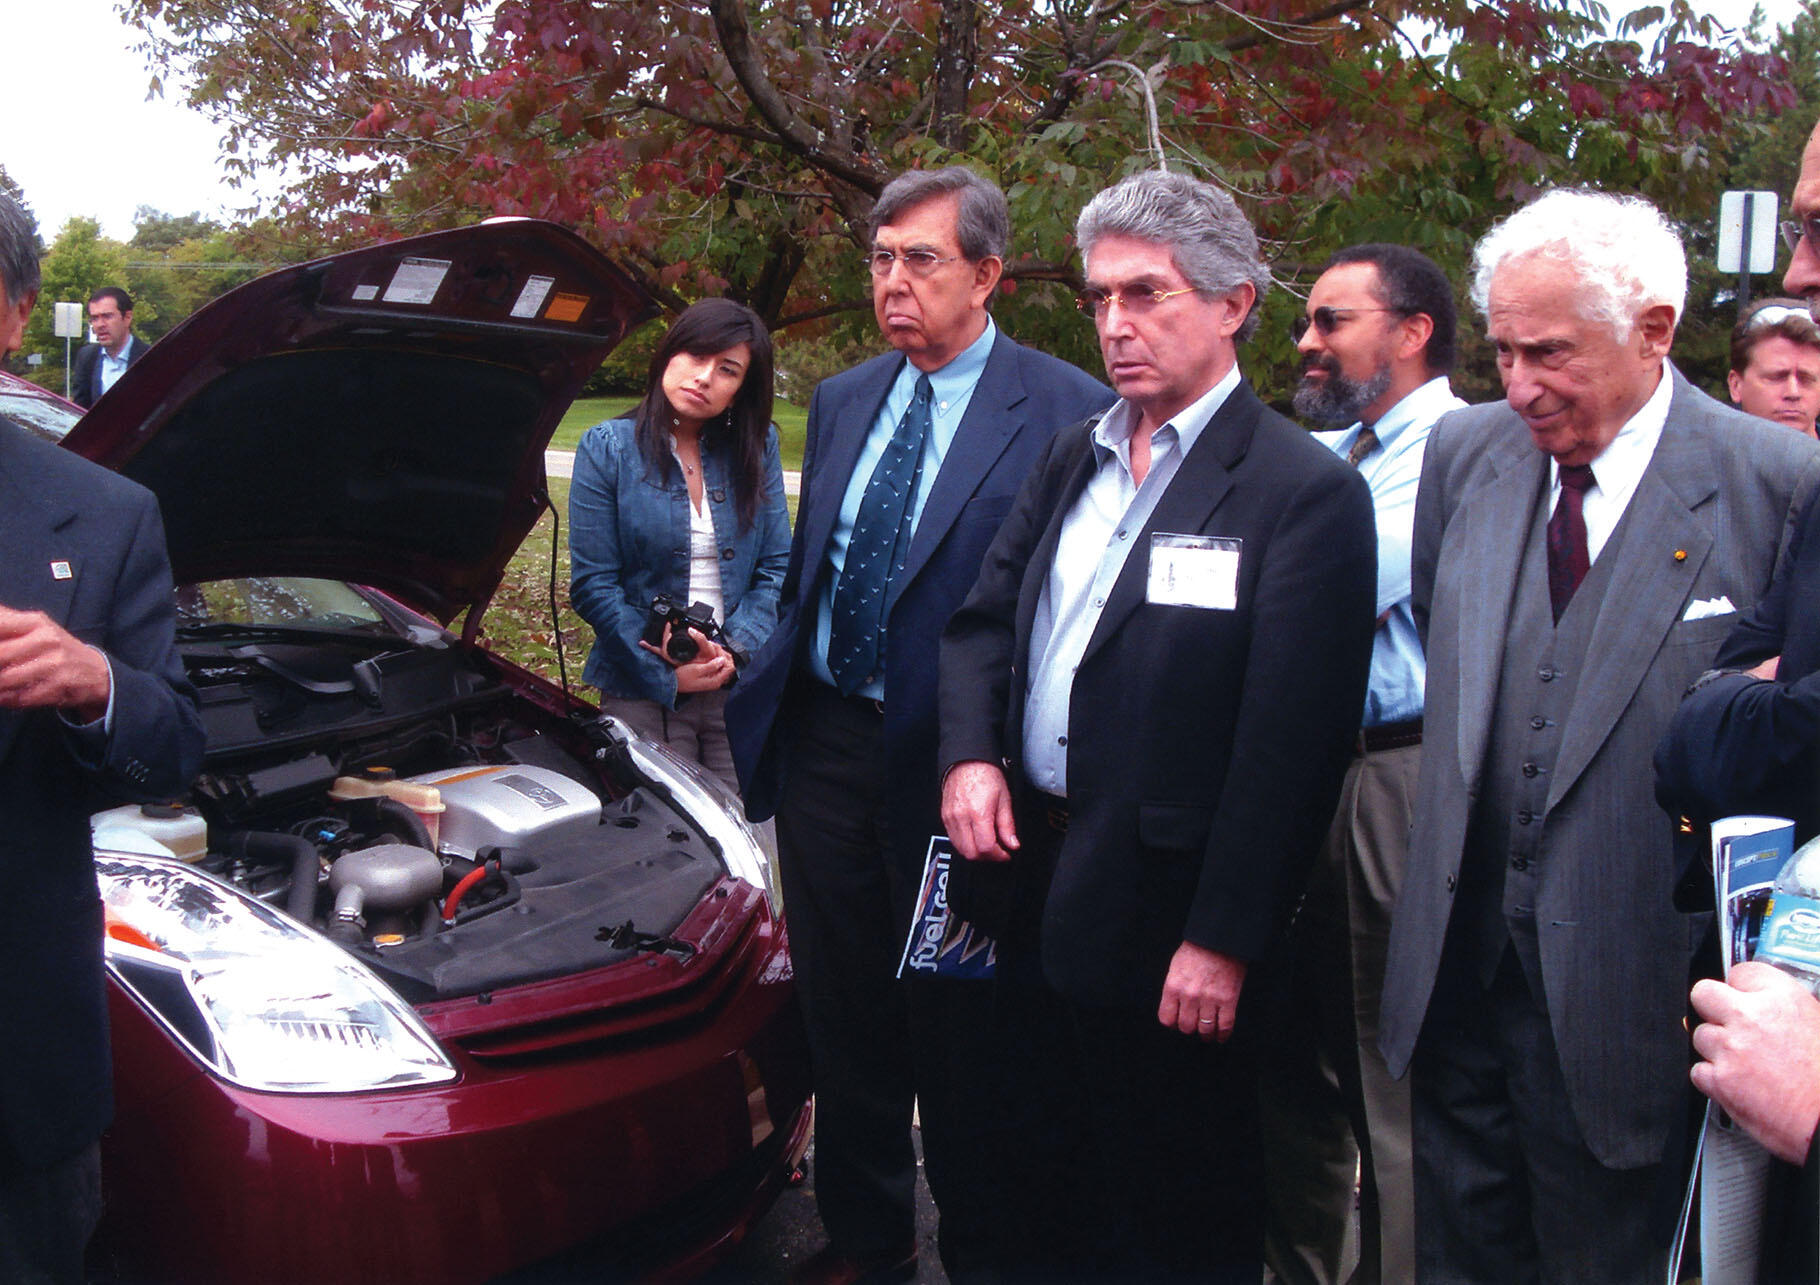  Dionicia Ramos, Cuauhtémoc Cárdenas, Roberto Dobles, Christopher Edley, and Stan Ovshinsky with a hydrogen-powered car. (Photo by Cristel Heinrich Bettoni.) 